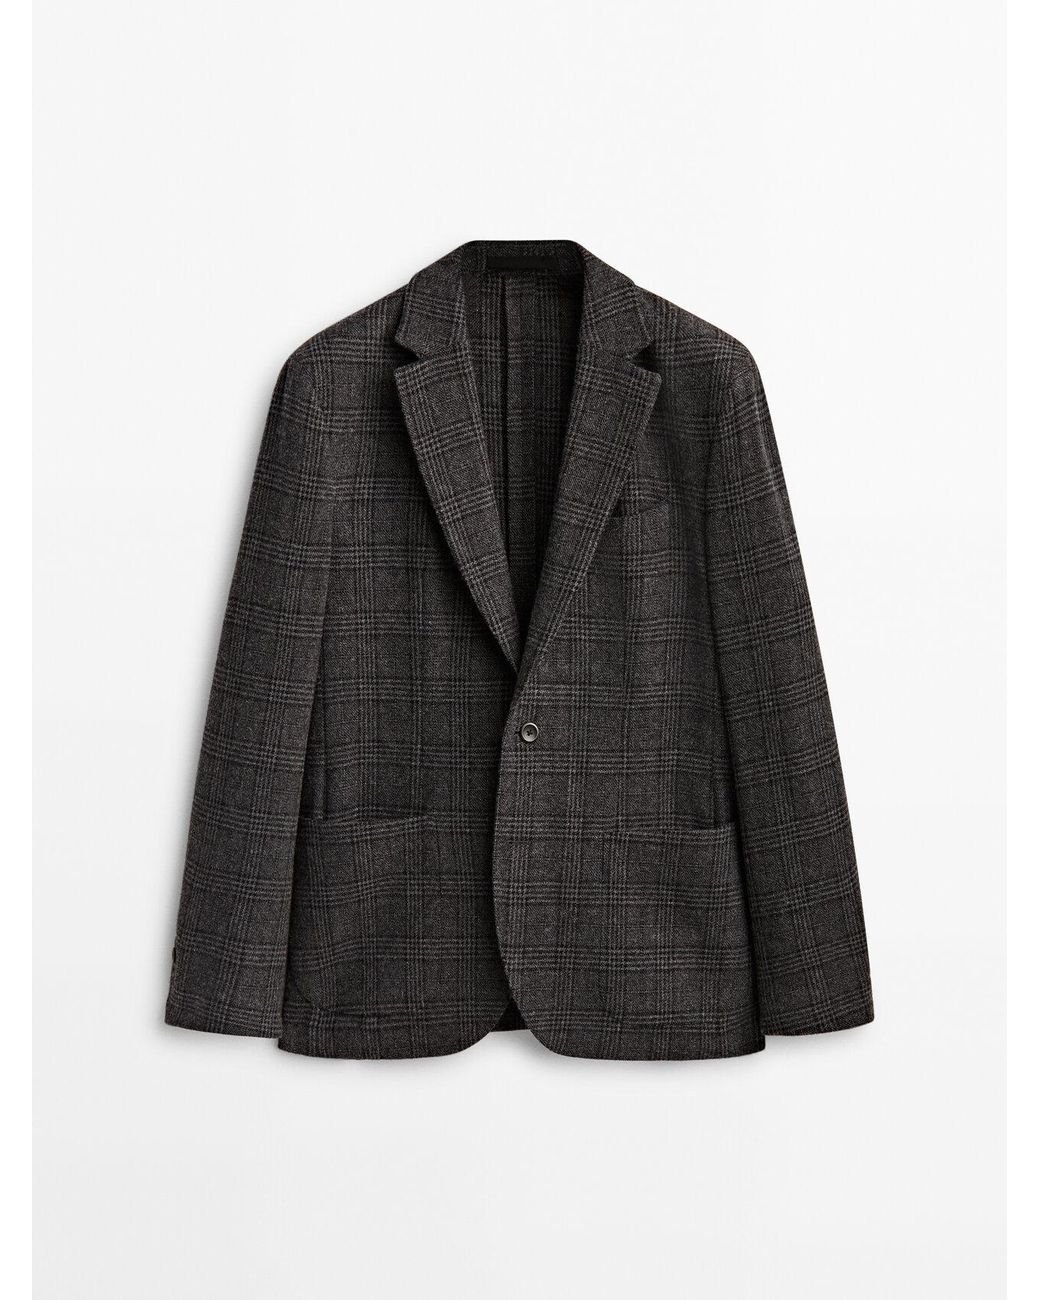 MASSIMO DUTTI Grey Wool Checked Blazer in Black for Men | Lyst